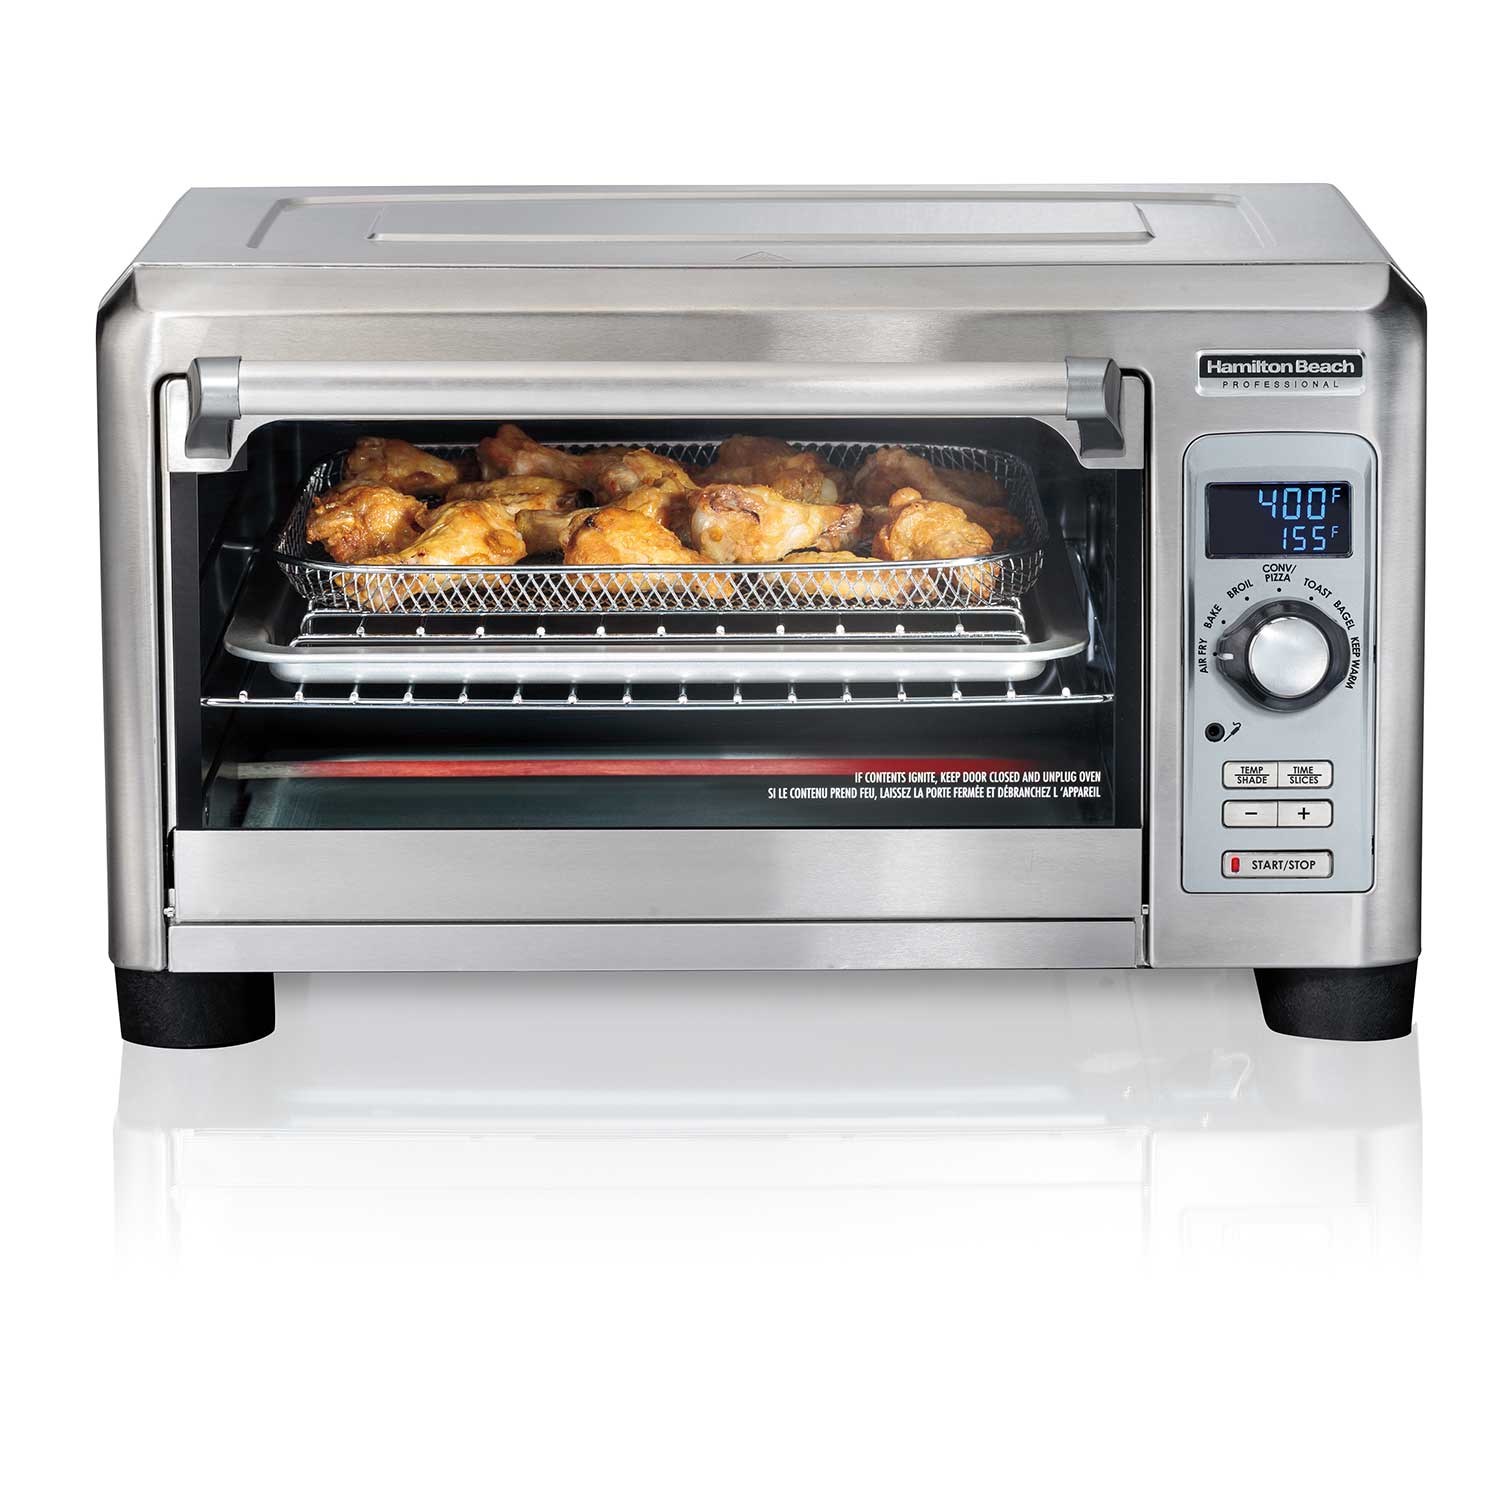 Sure-Crisp® Digital Air Fryer Countertop Oven from Hamilton Beach